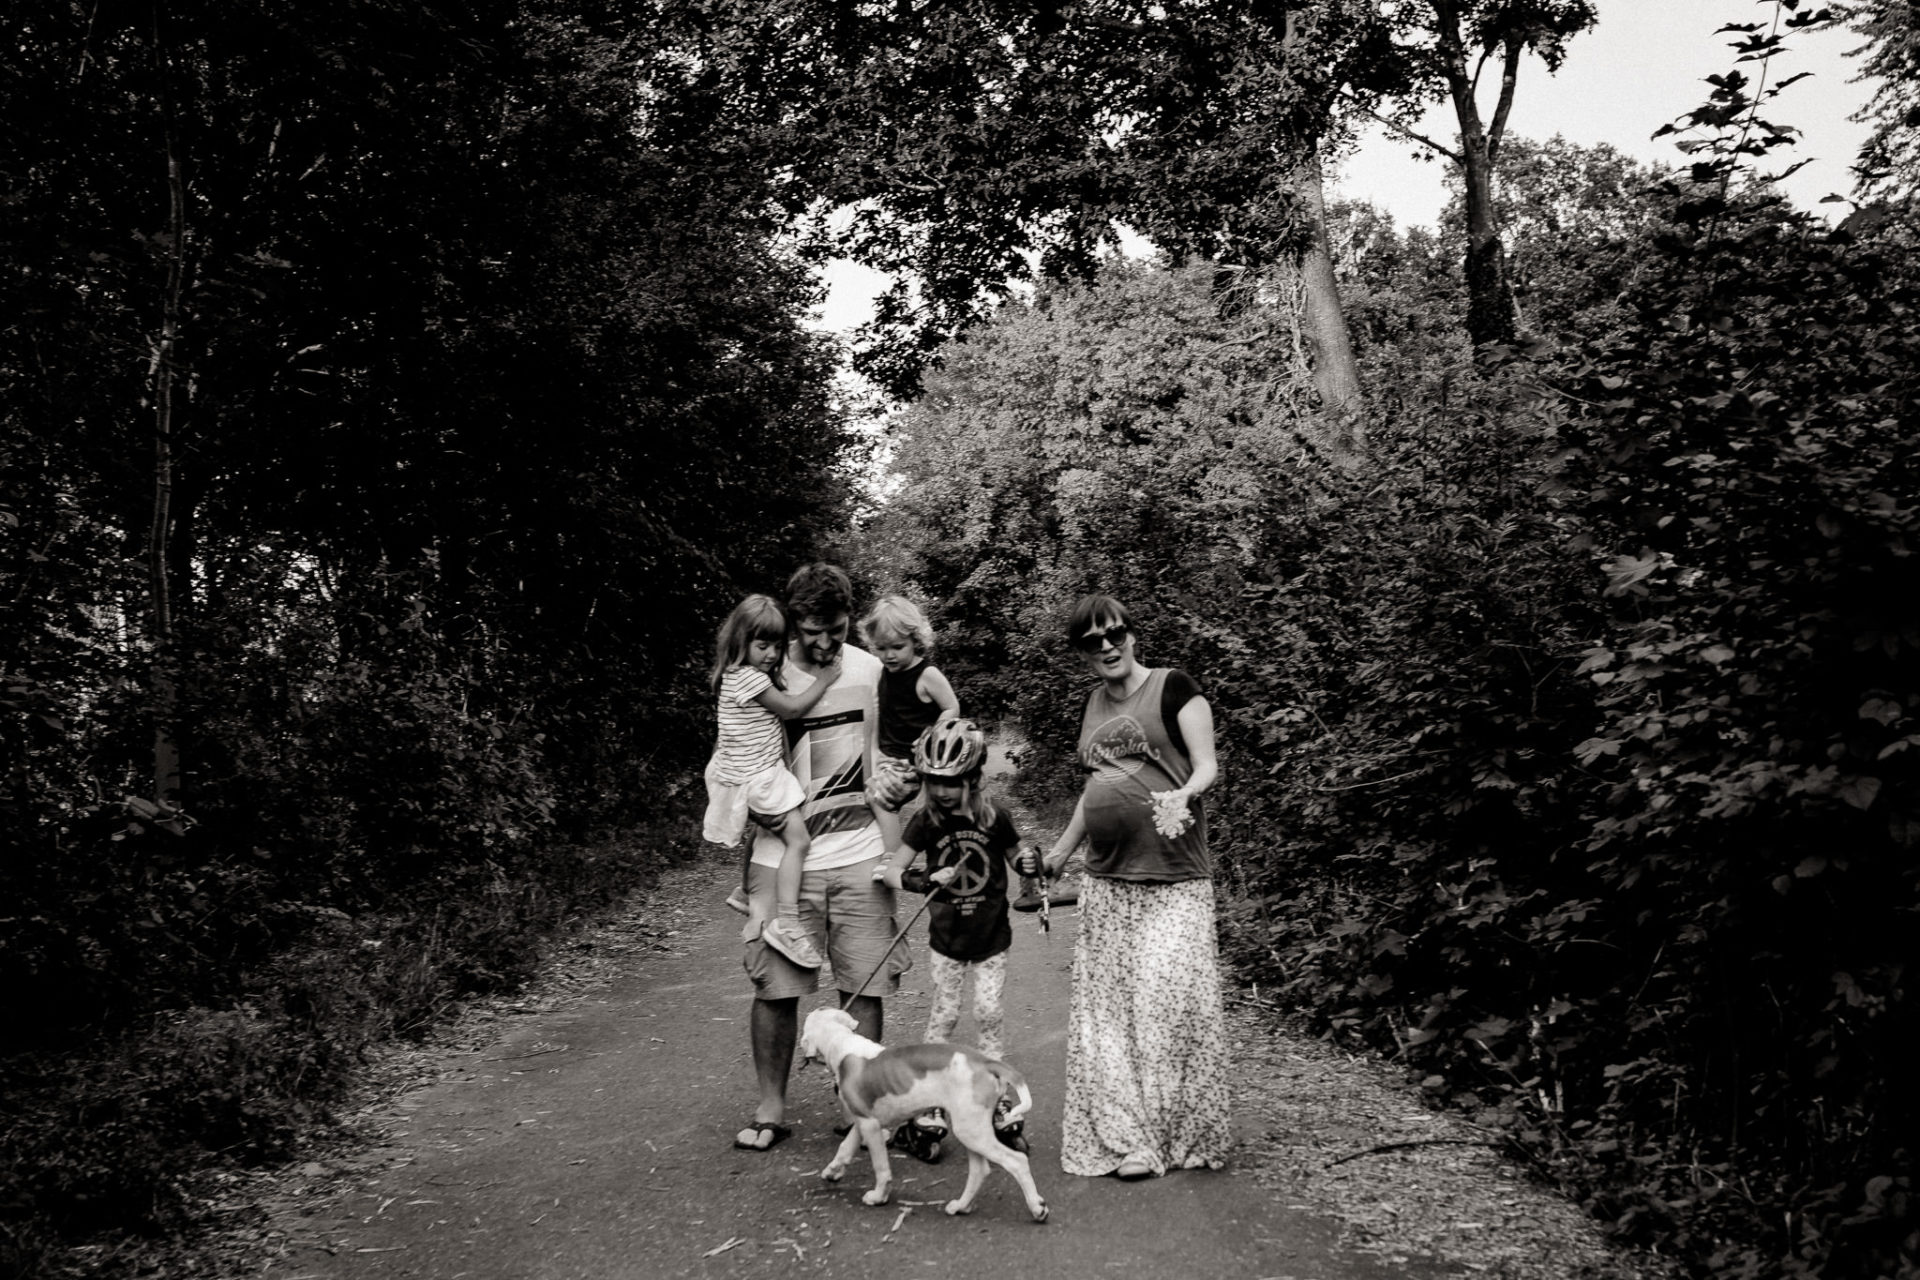 ungestellte emotionale kreative familienbilder-familienfotograf mainz stuttgart-großfamilie Ausflug im Wald-schwangerschaft-babybauch shooting-familienbilder karlsruhe